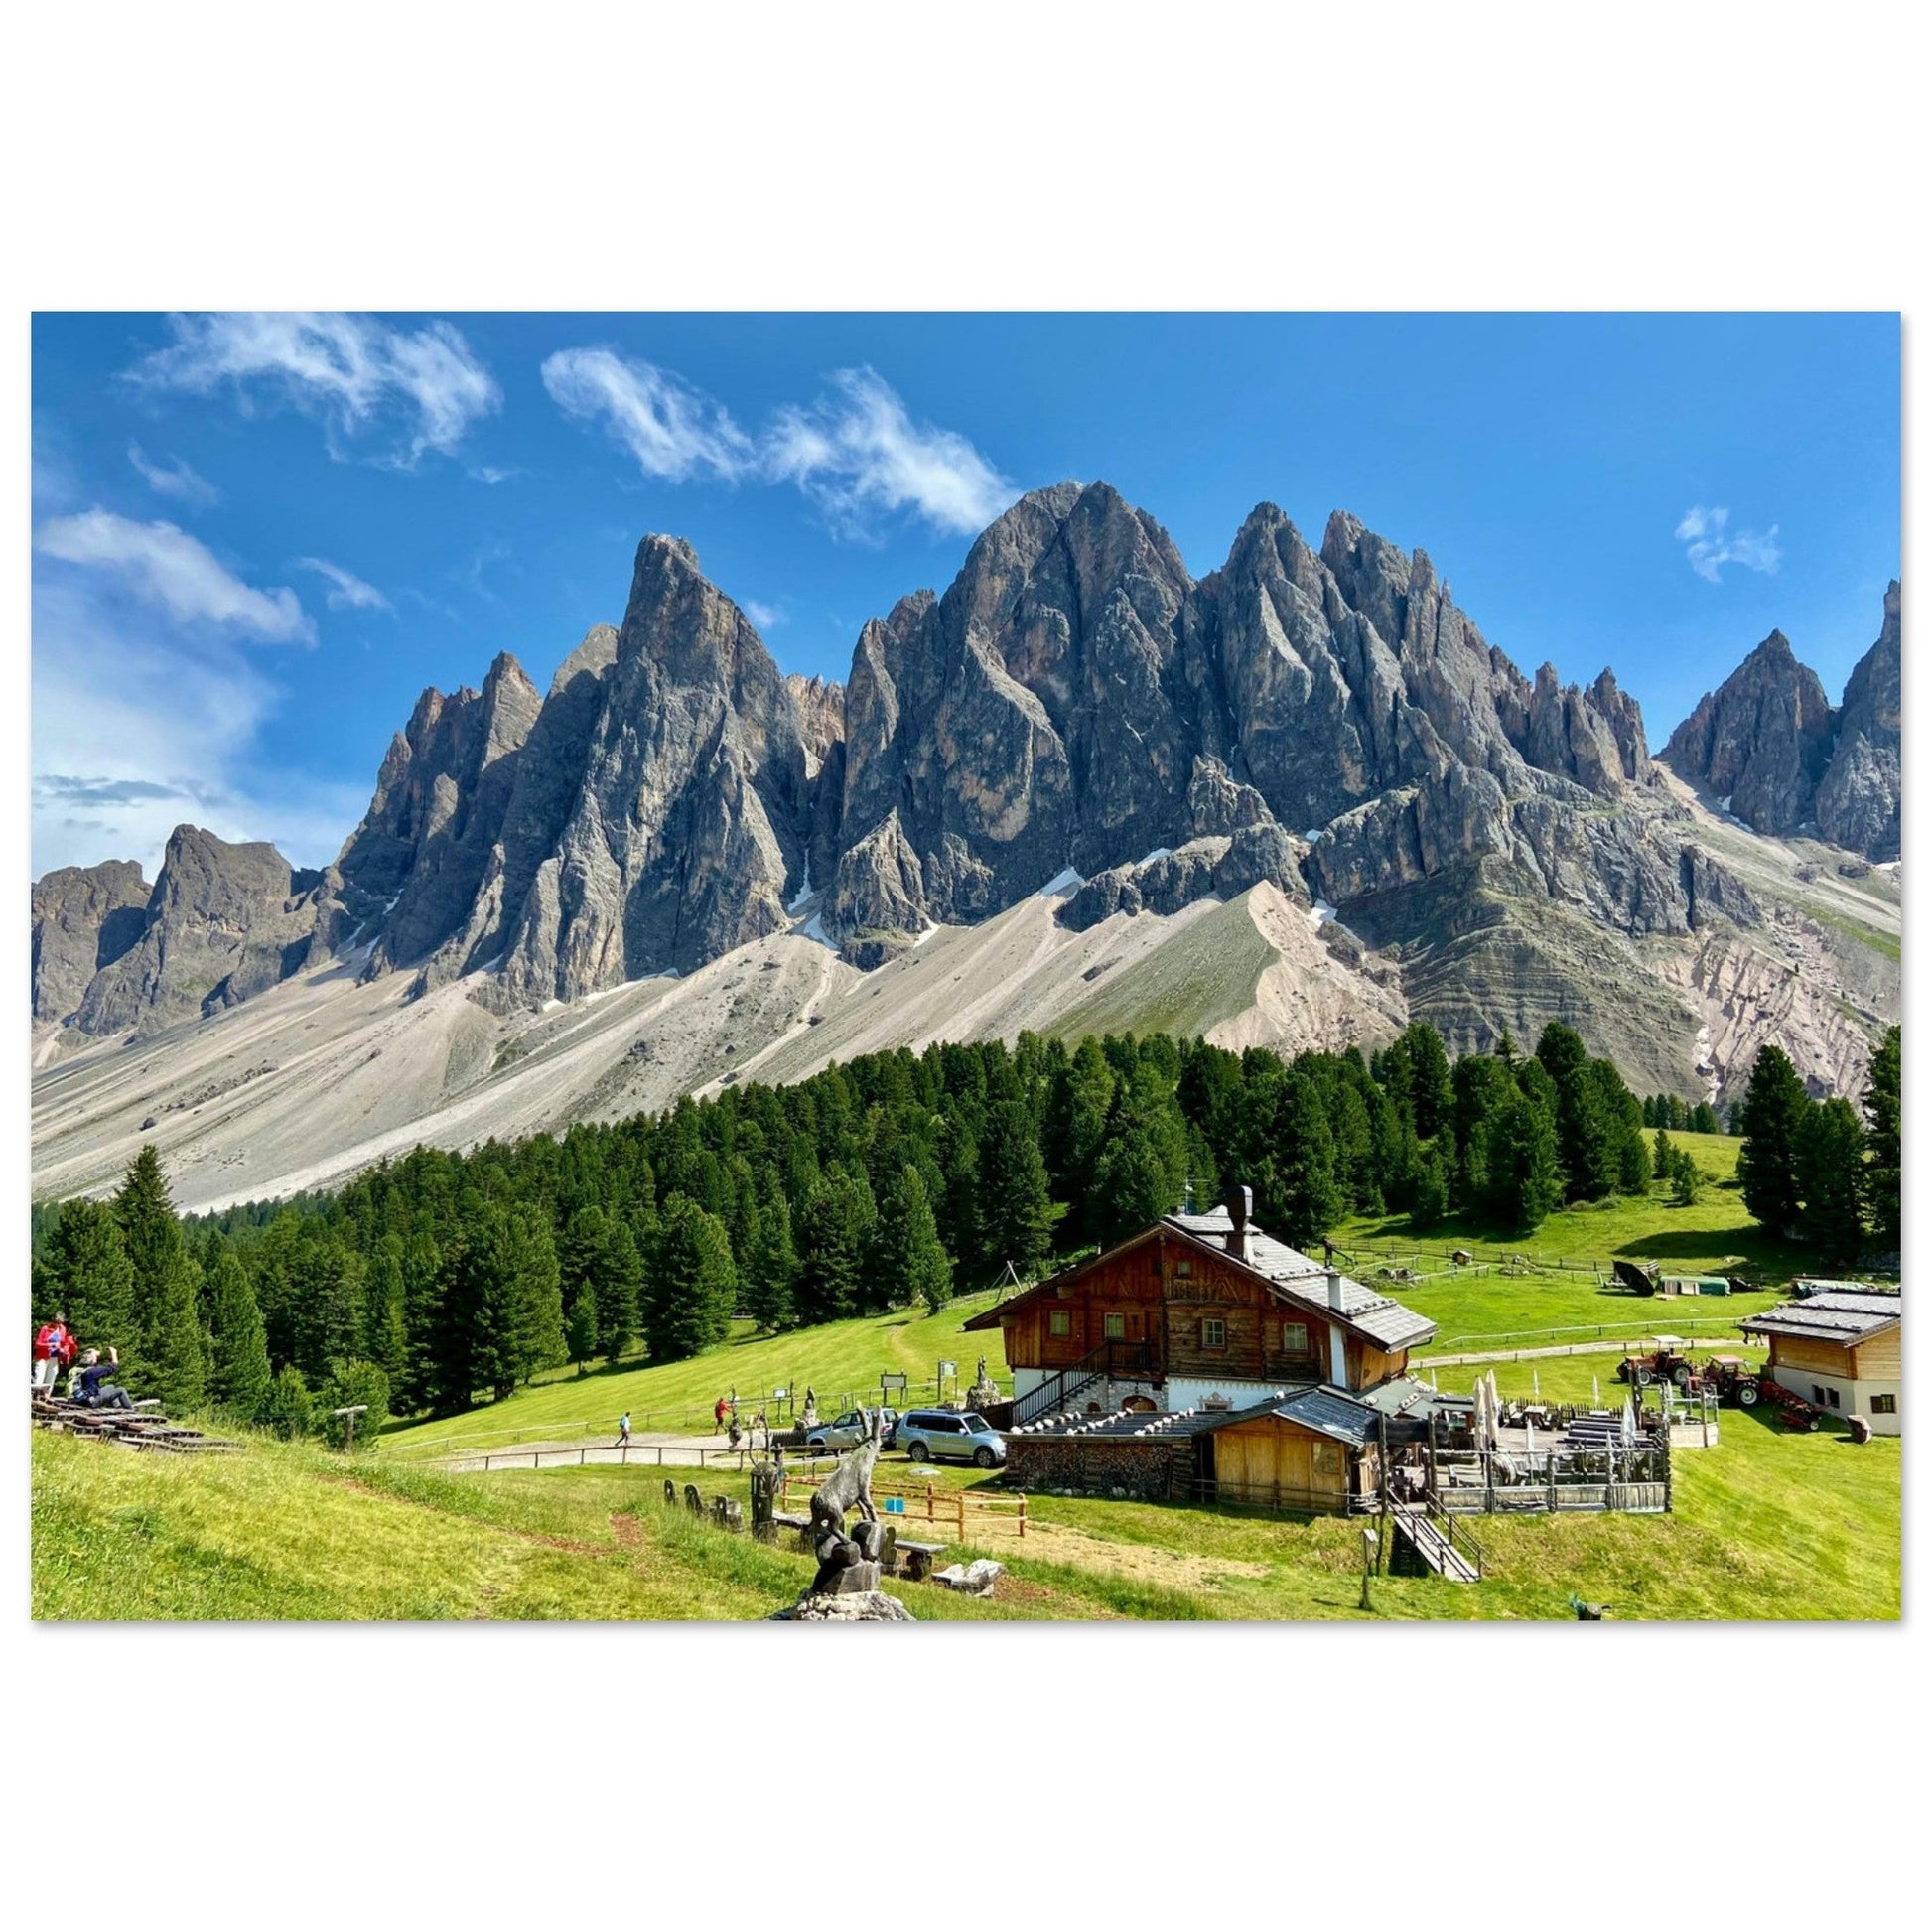 Vente Photo de Funes, Trentin-Haut-Adige, Italie #2 - Tableau photo paysage